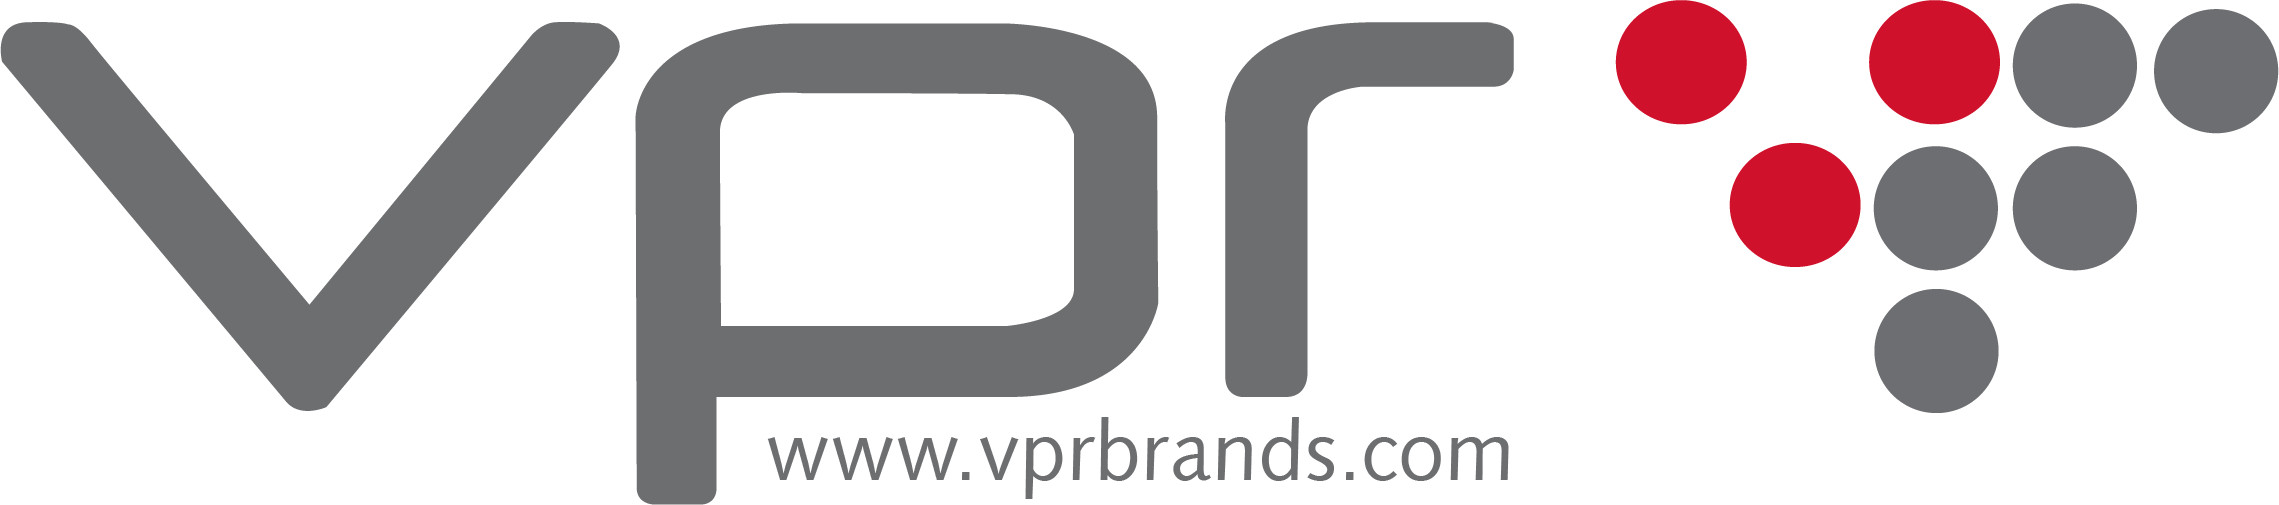 VPR Brands, LP is ex